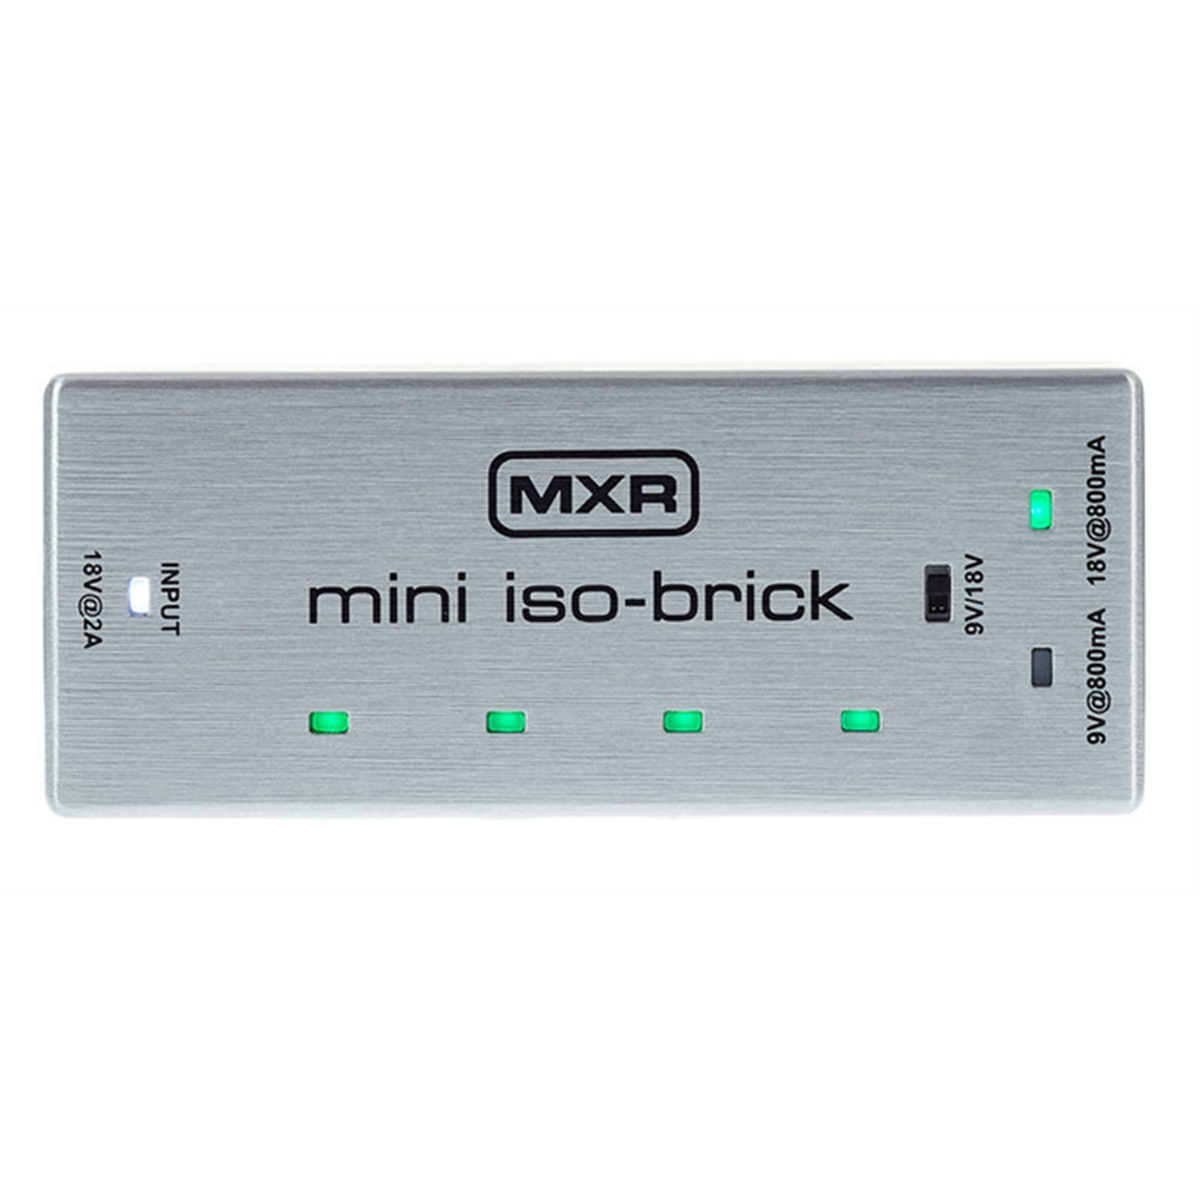 Omega Music  MXR M239 Mini Iso-Brick